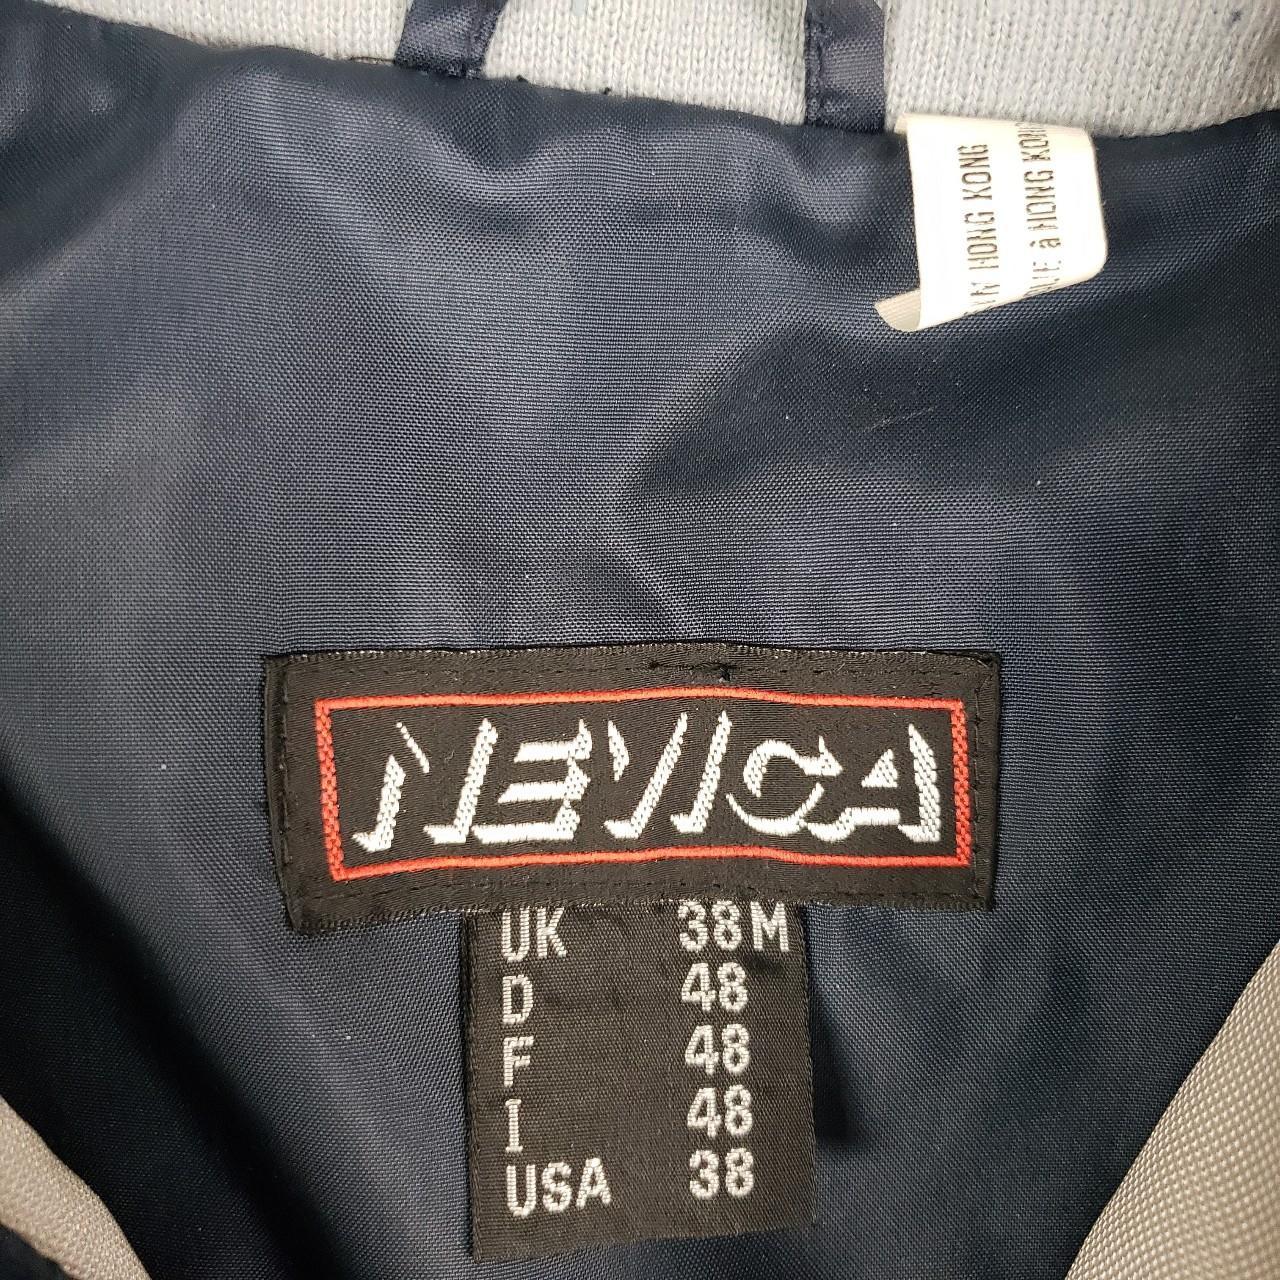 Product Image 2 - Nevica

1980s Full Ski Suit

Some damage

Mens: